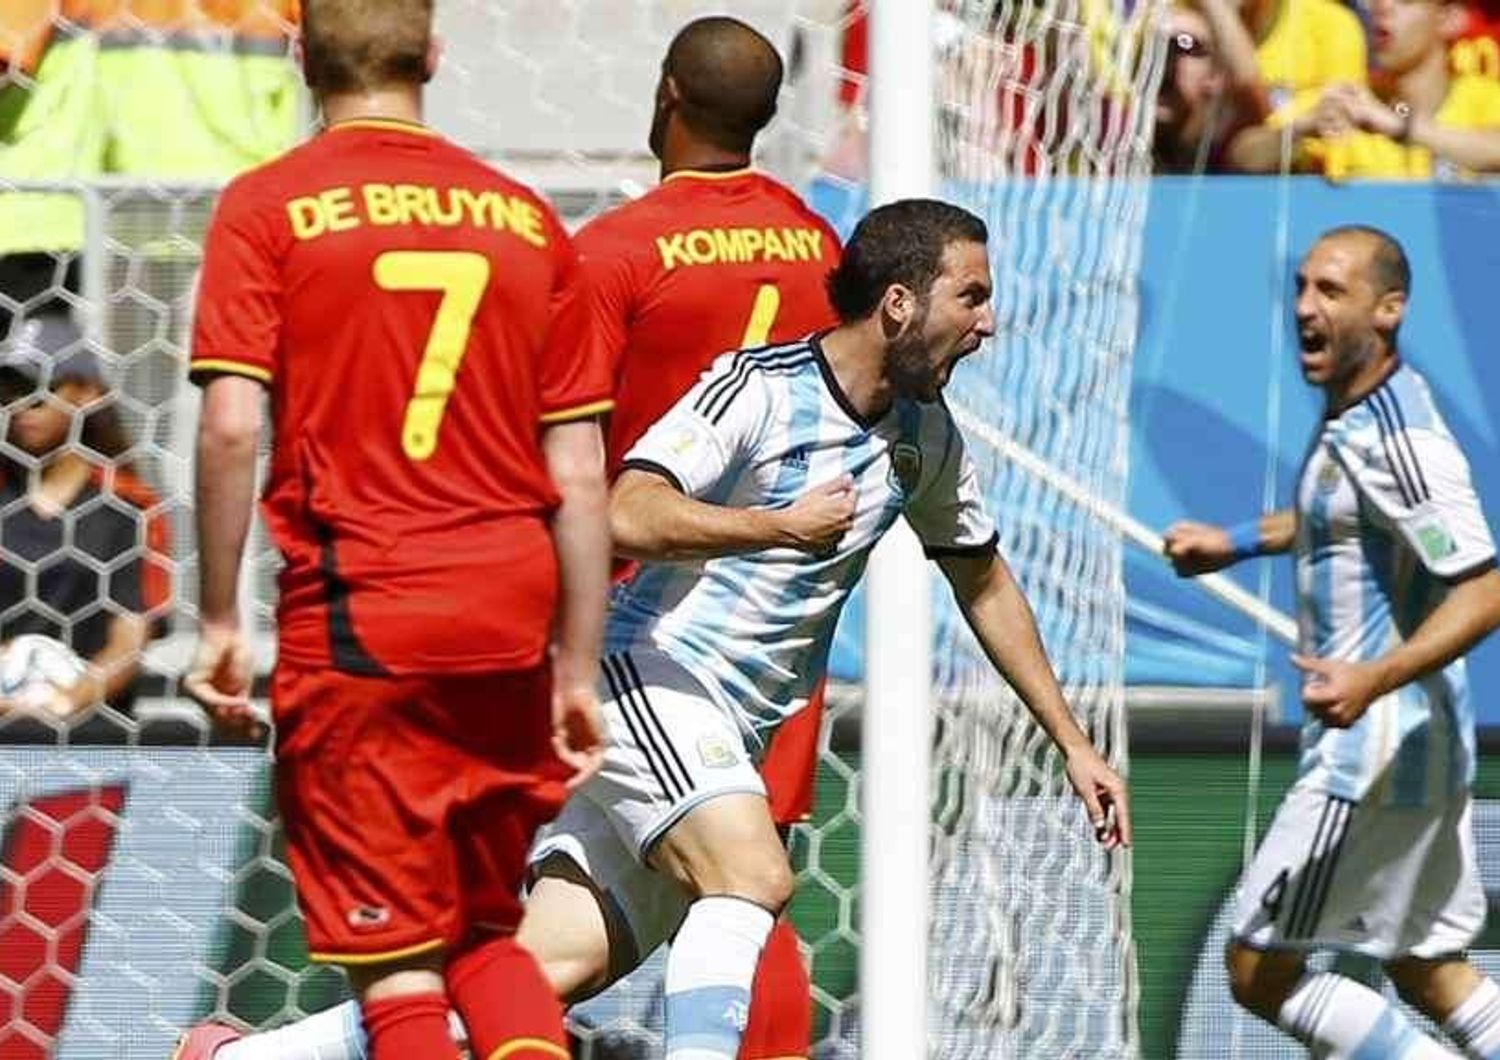 Argentina-Belgio 1-0, gol-capolavoro di Higuain dopo 6 minuti